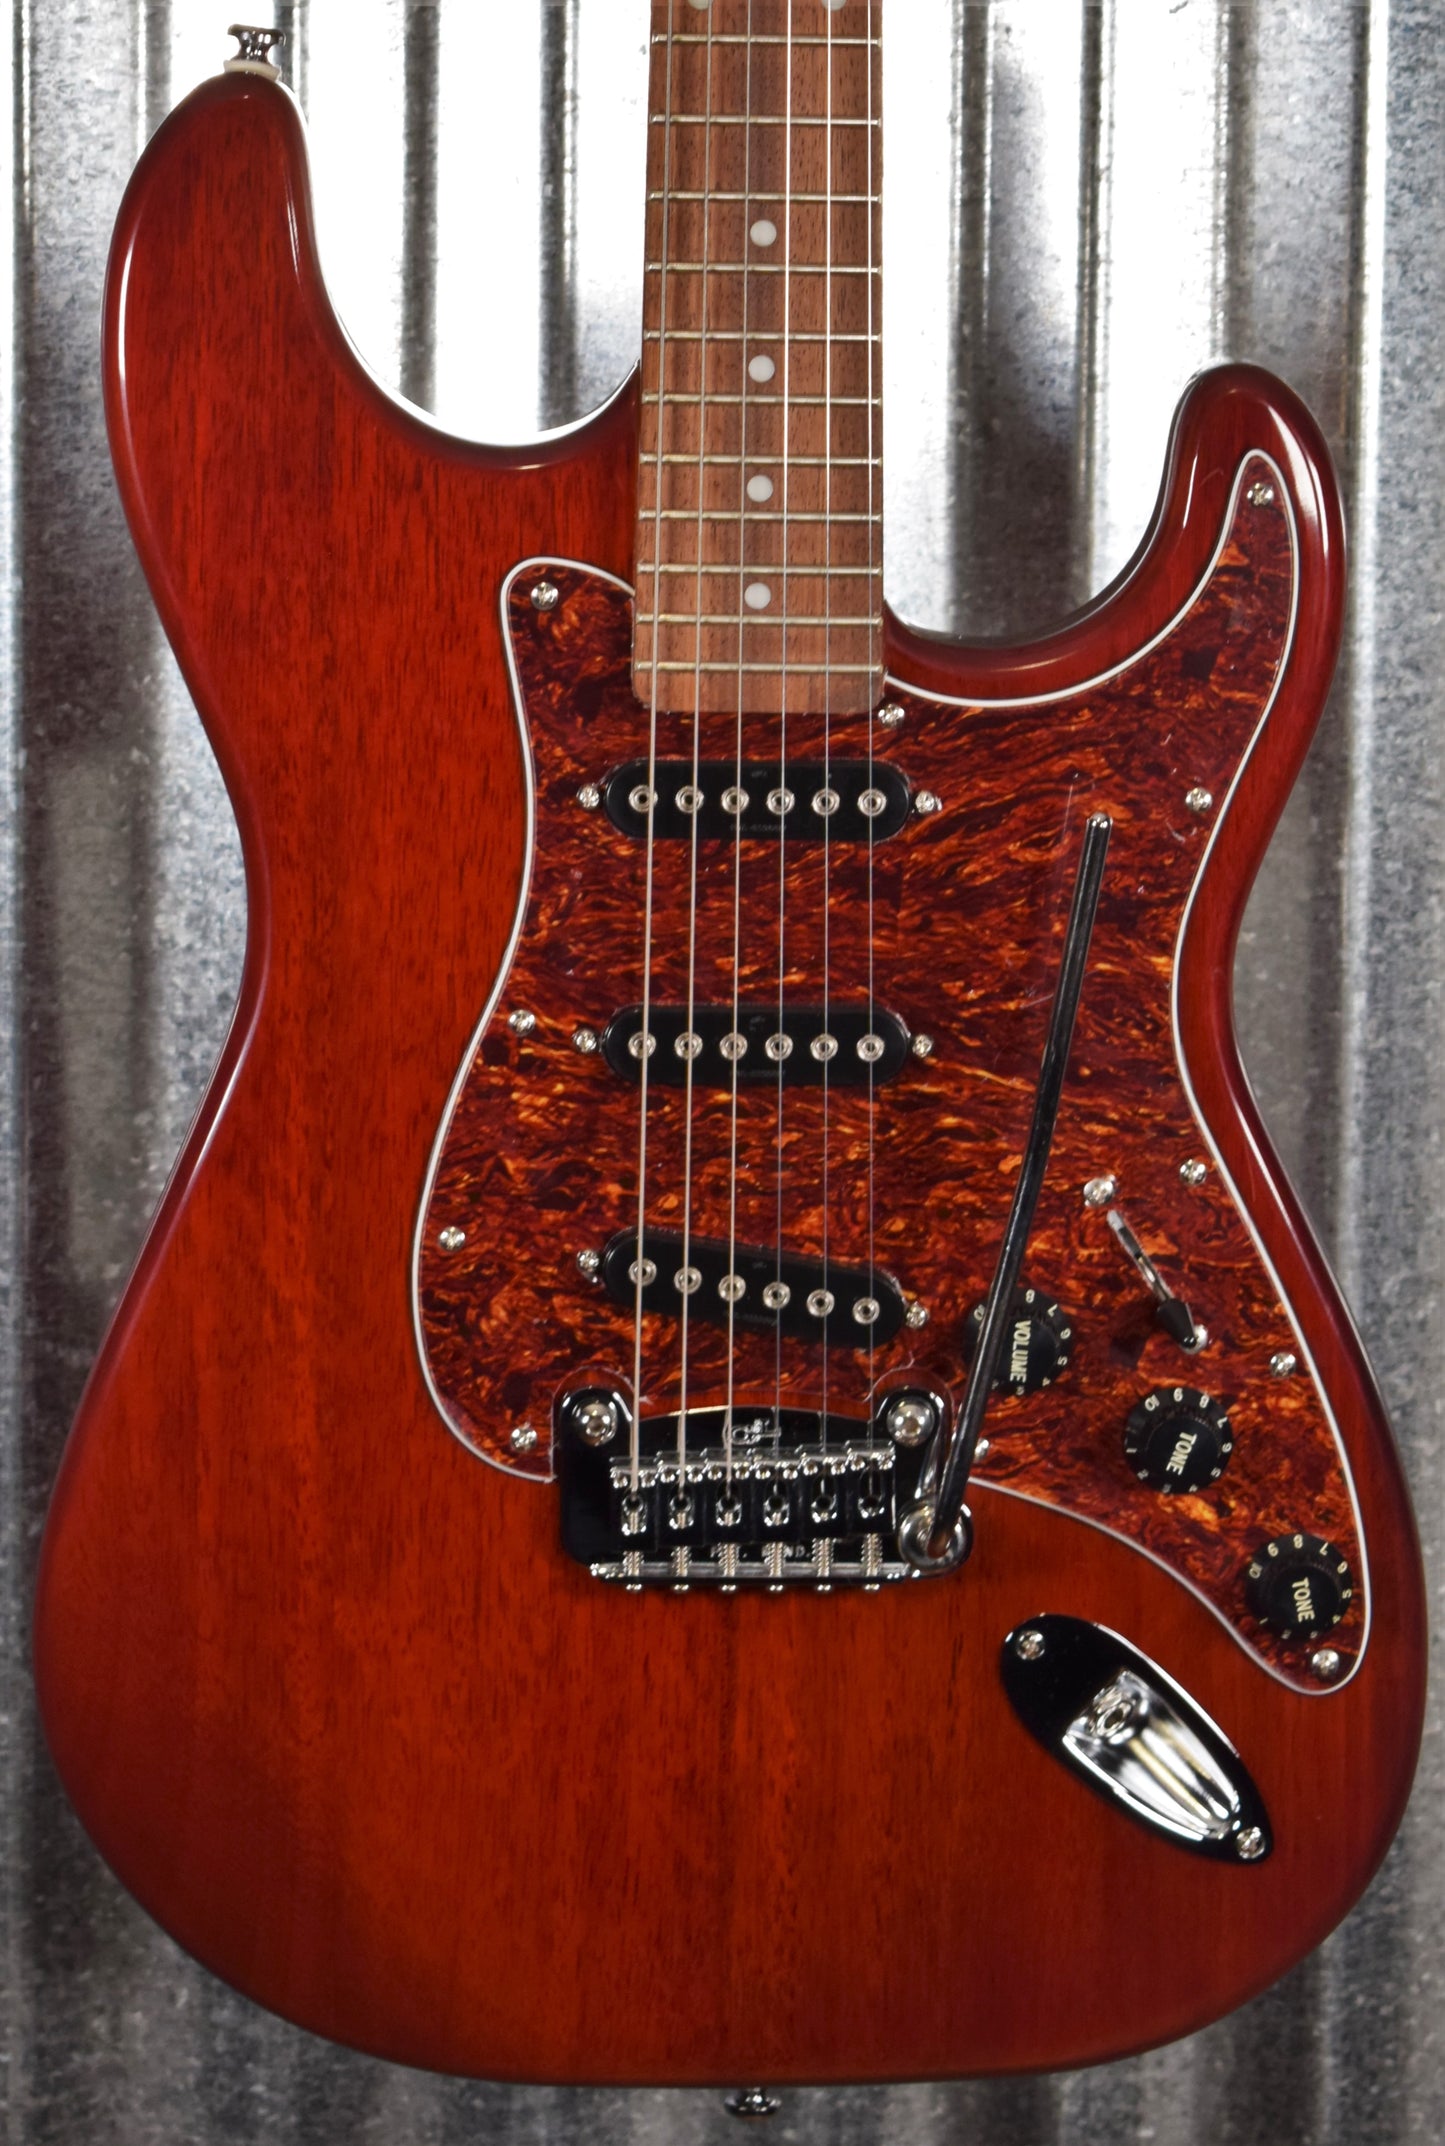 G&L Tribute S500 Irish Ale Guitar S-500 #3563 Demo